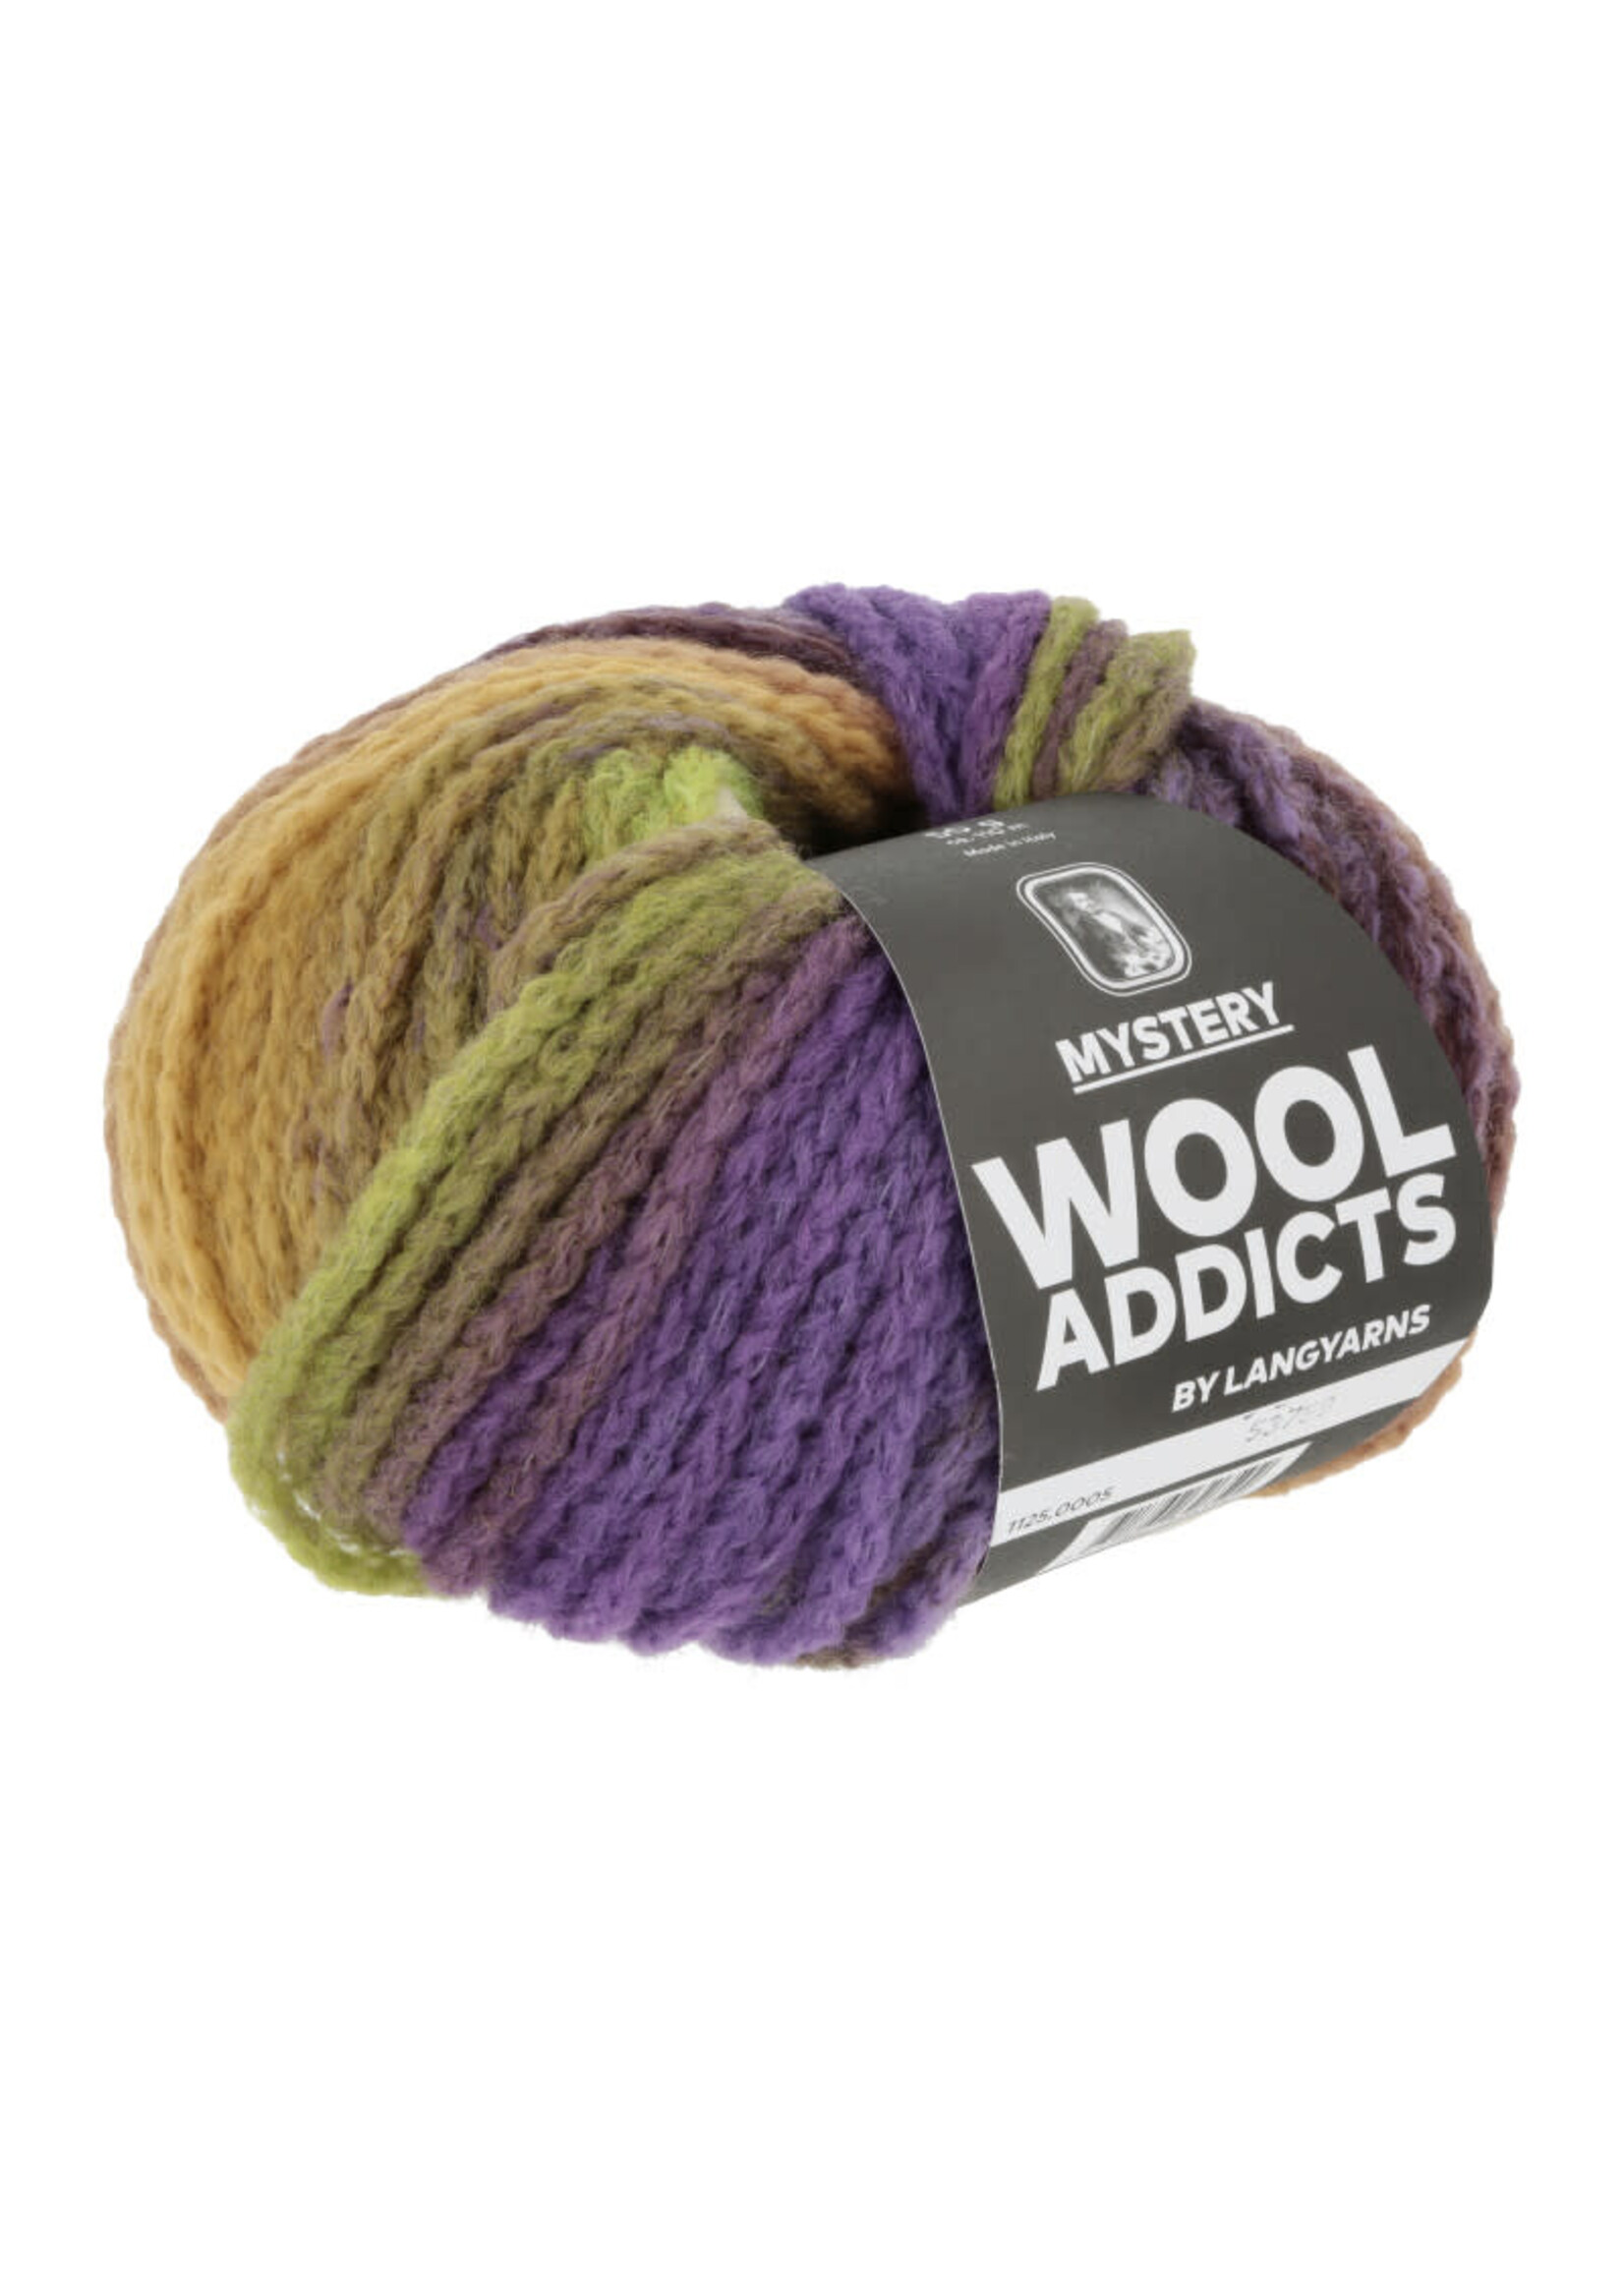 WoolAddicts Mystery - 0005